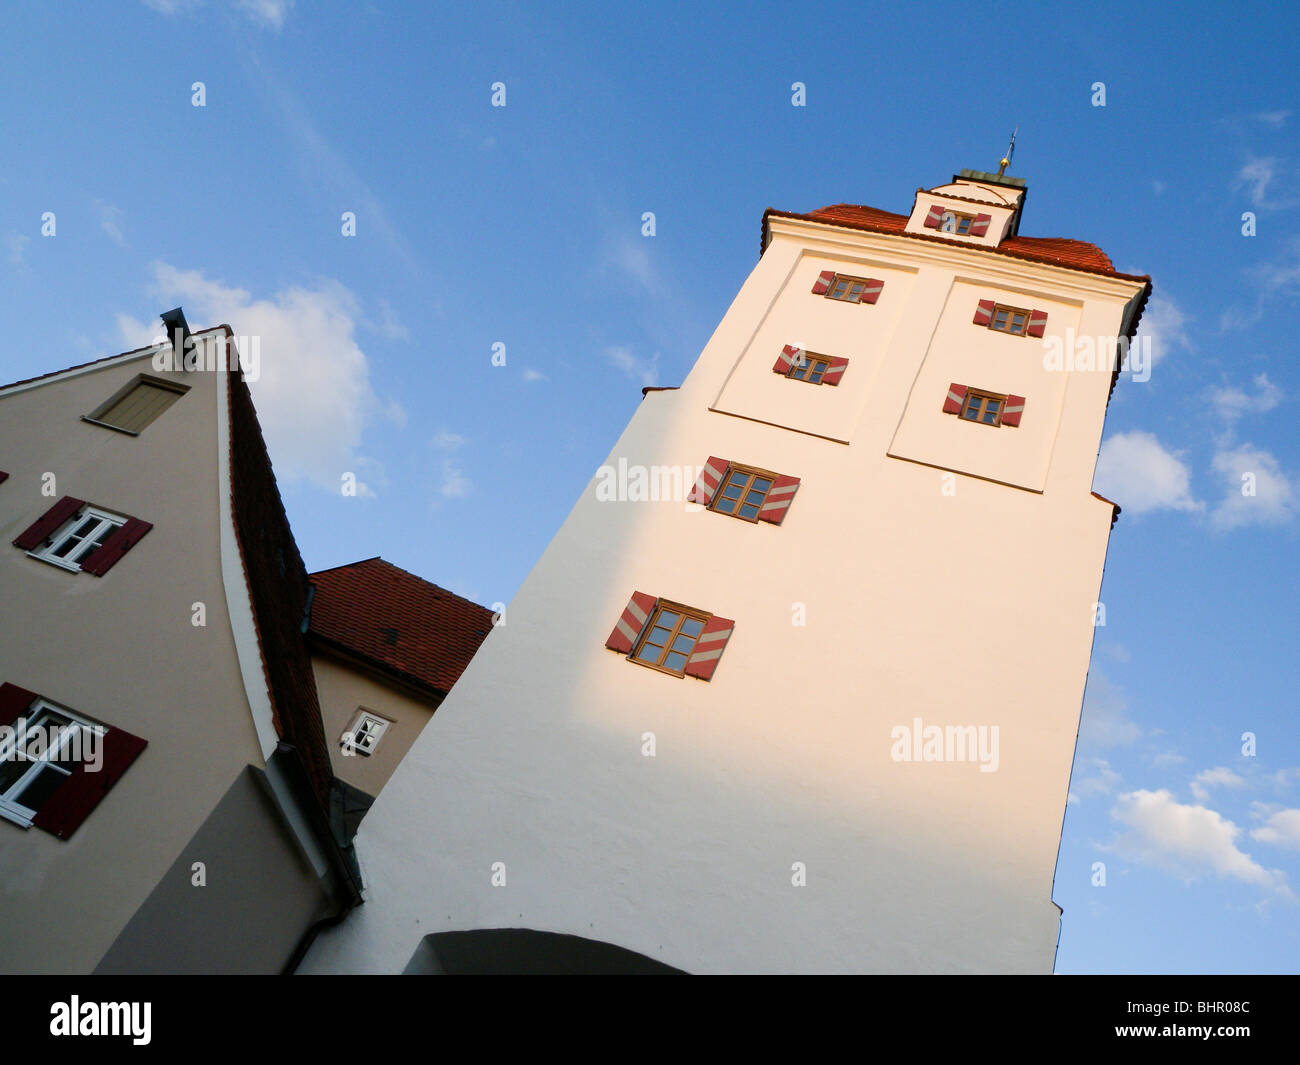 Città vecchia di Gundelfingen sul Danubio, Baviera, Germania Foto Stock